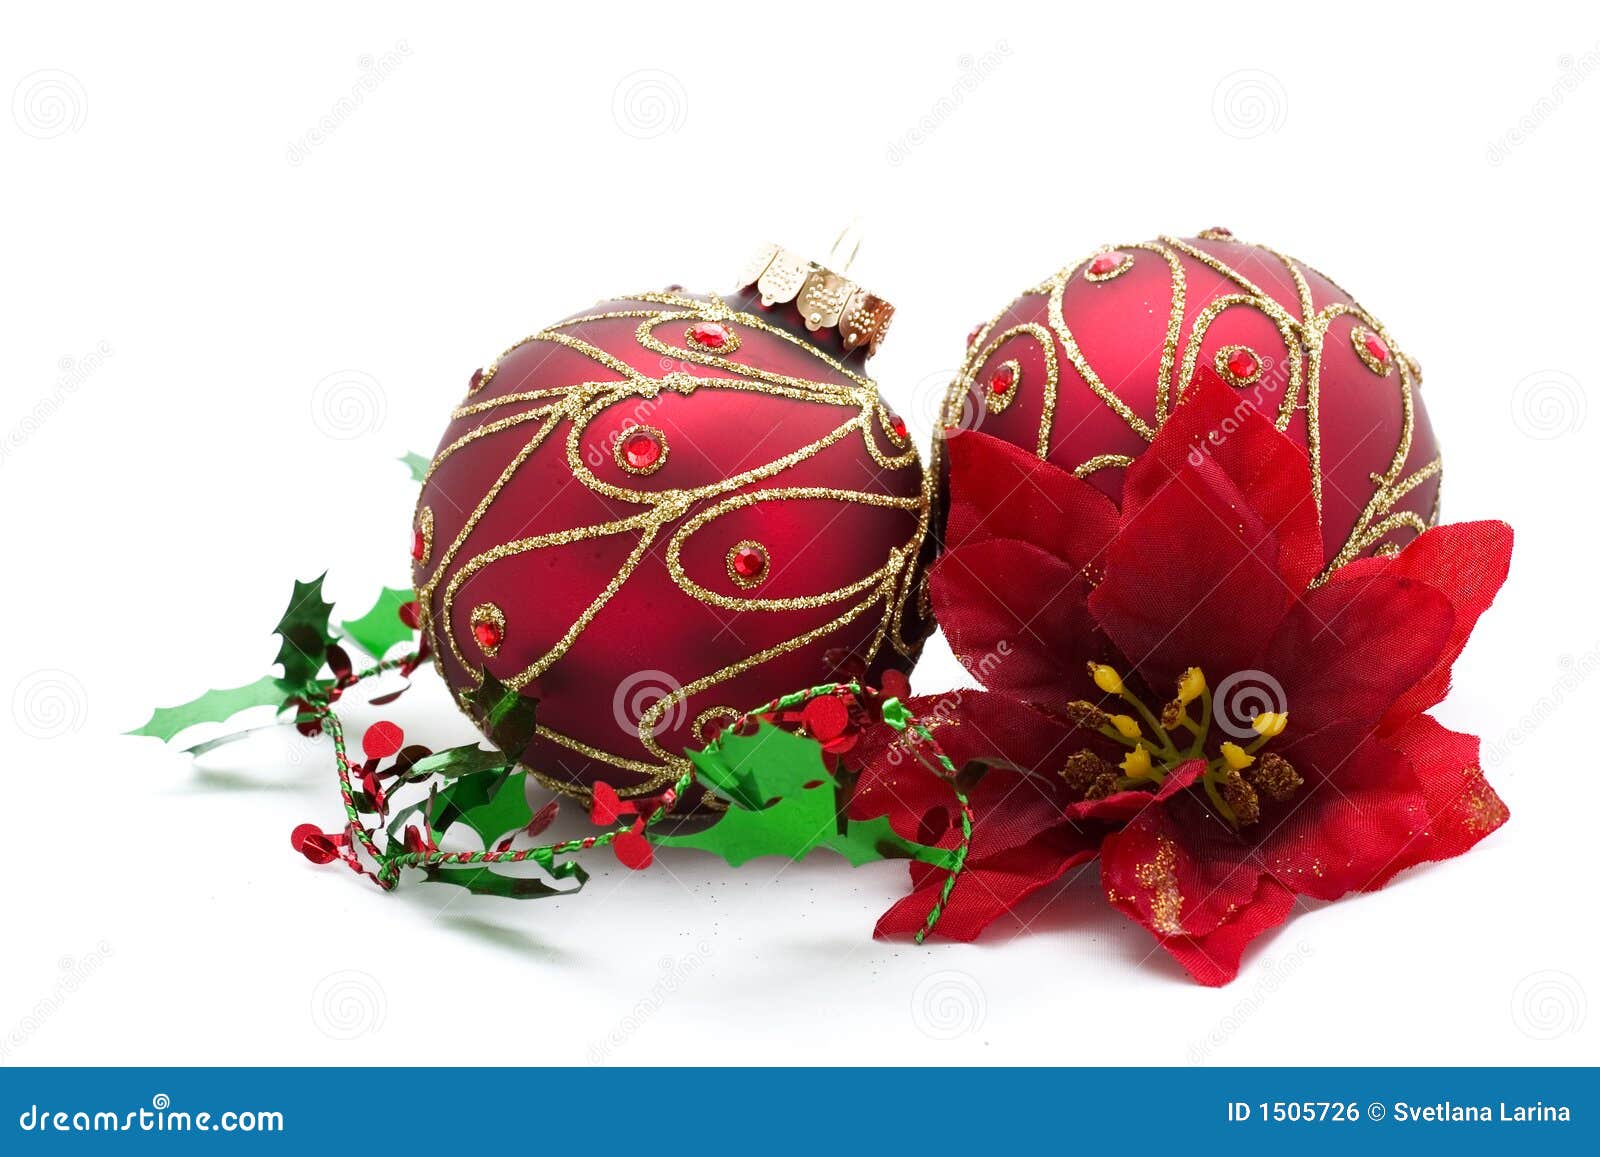 Red christmas decorations stock photo. Image of celebration - 1505726